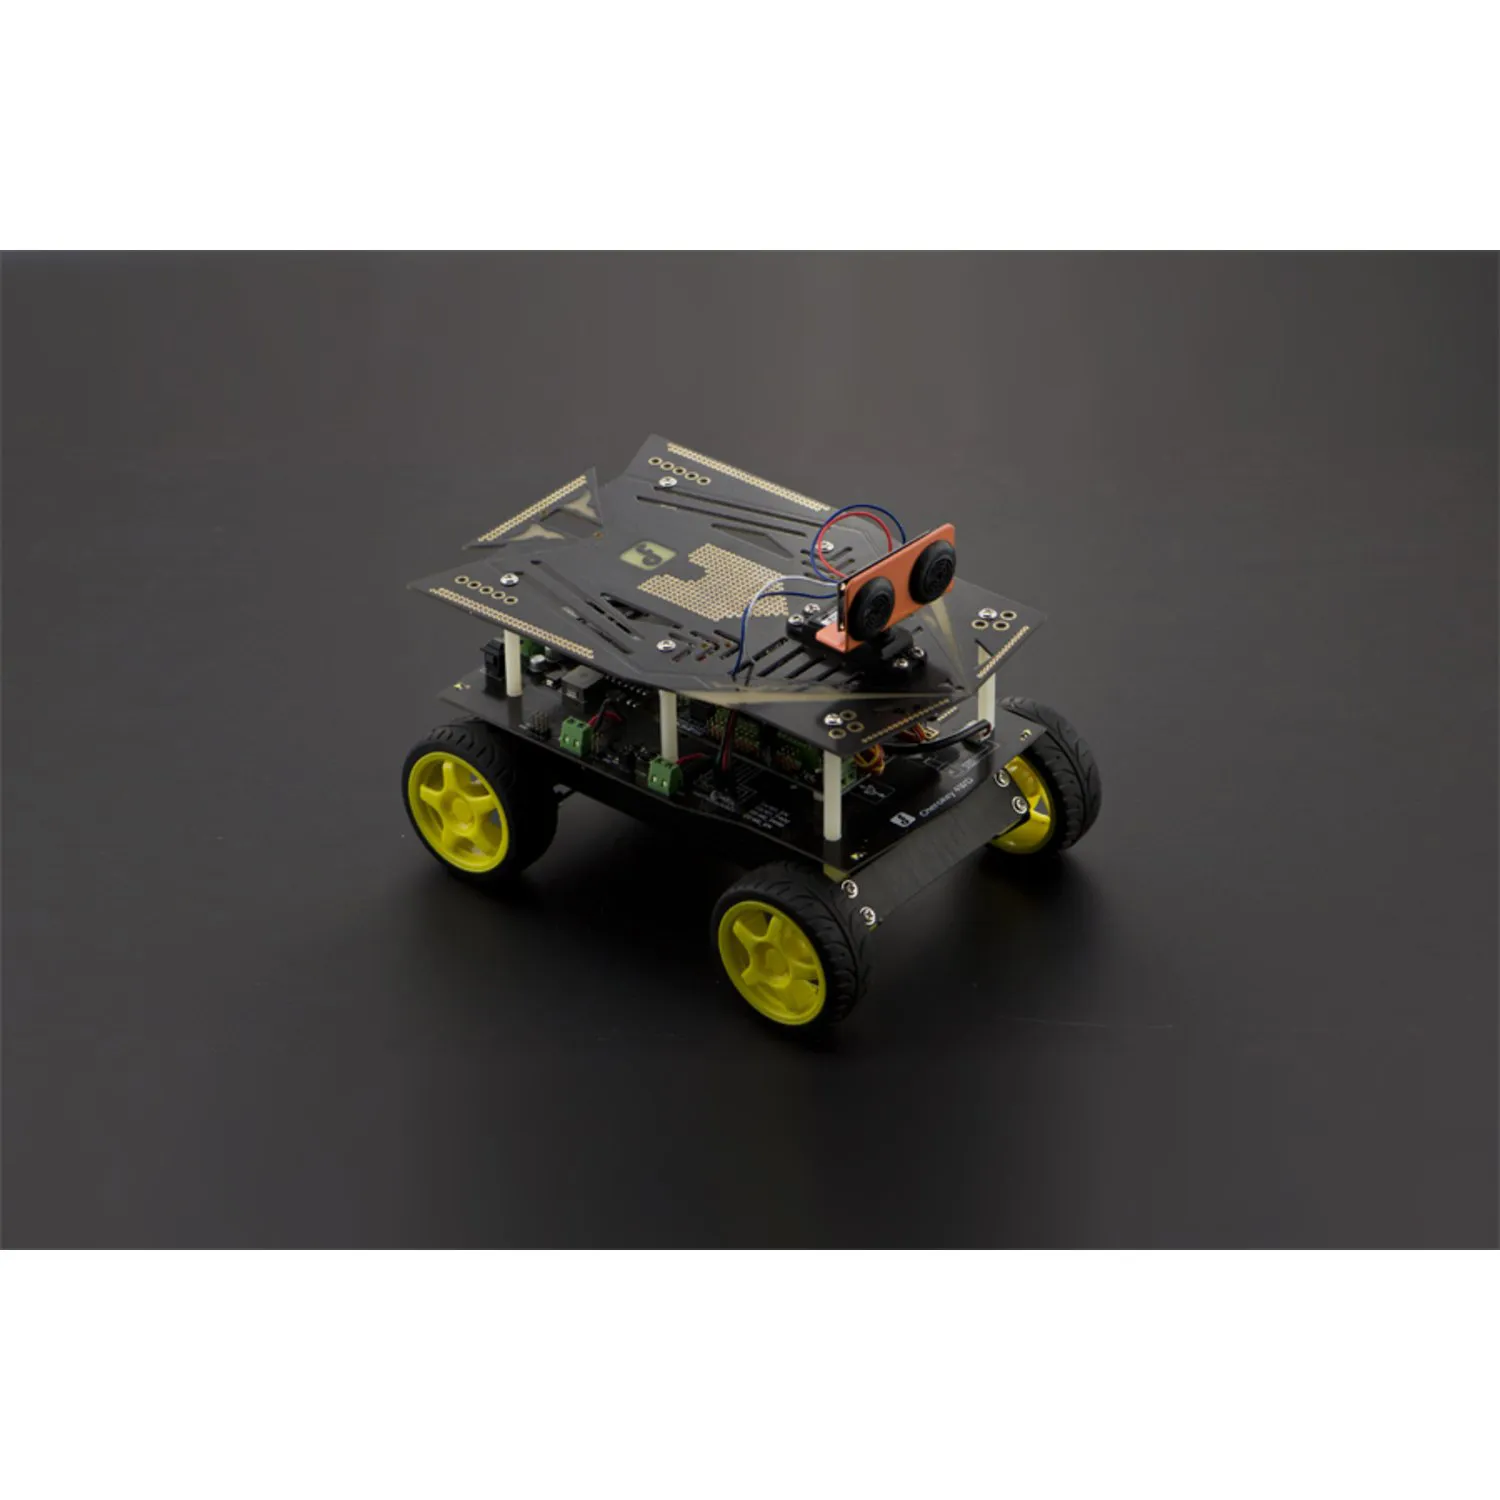 Photo of Cherokey:4WD Basic Arduino Robot Building Kit